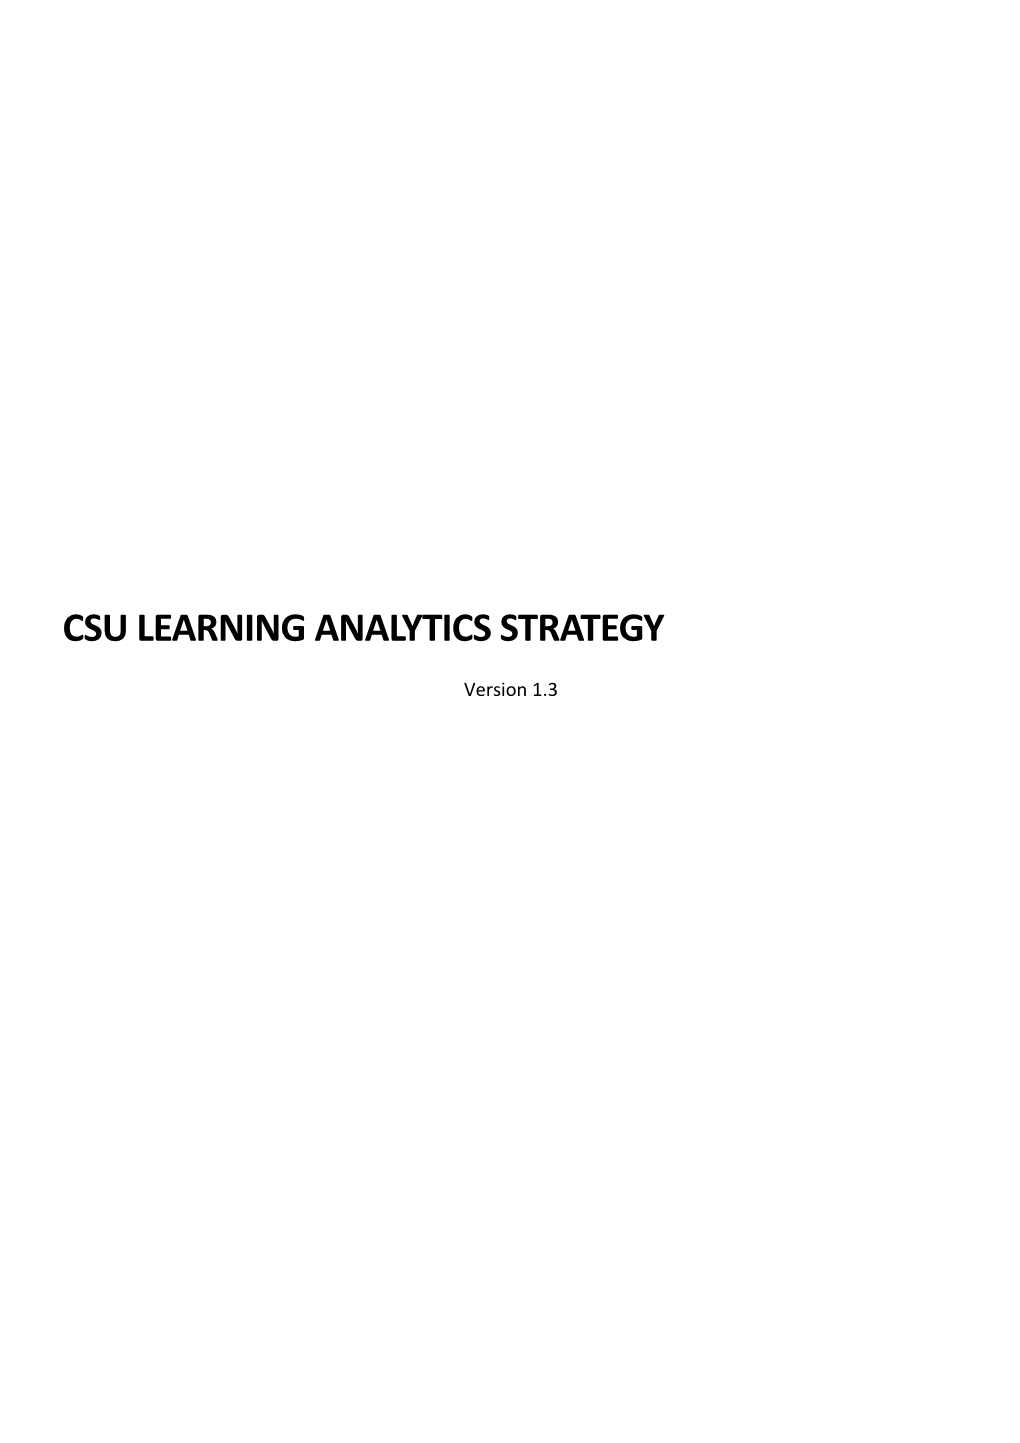 CSU Learning Analytics Strategy